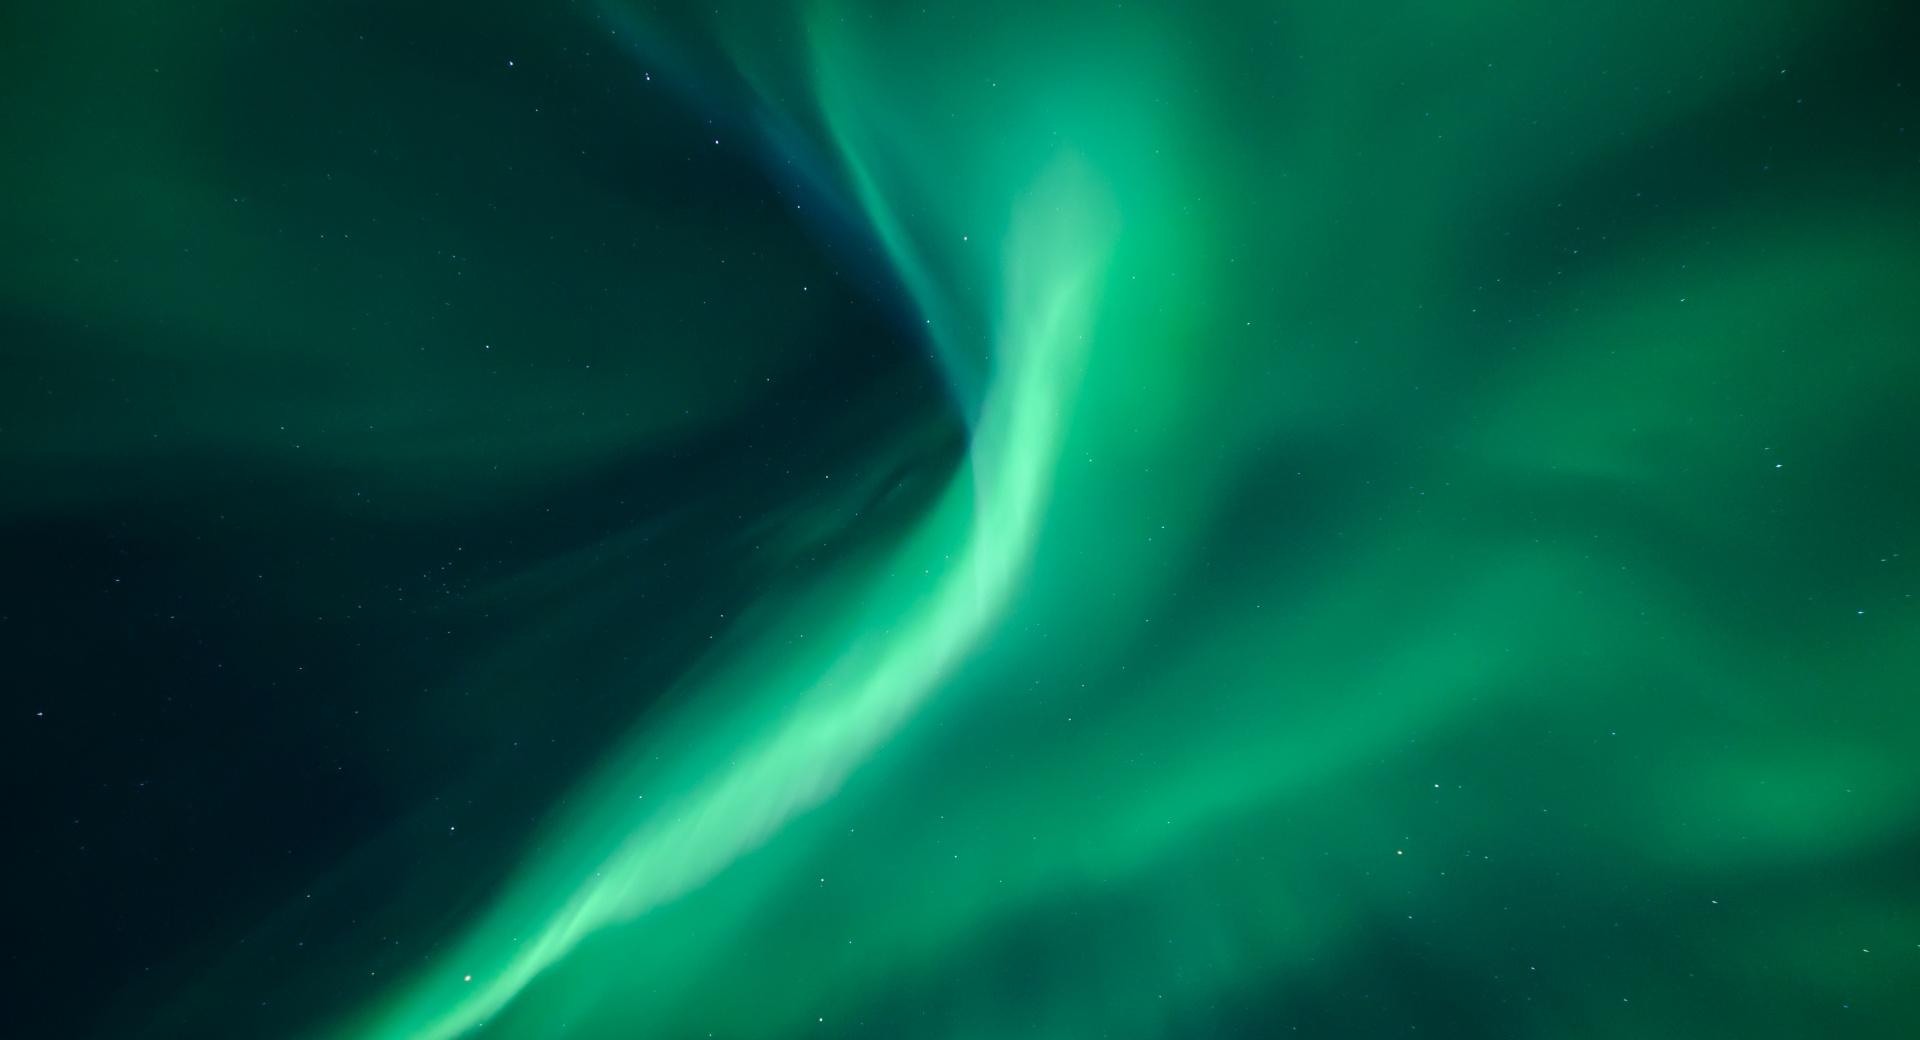 Northern Lights Alaska at 1280 x 960 size wallpapers HD quality